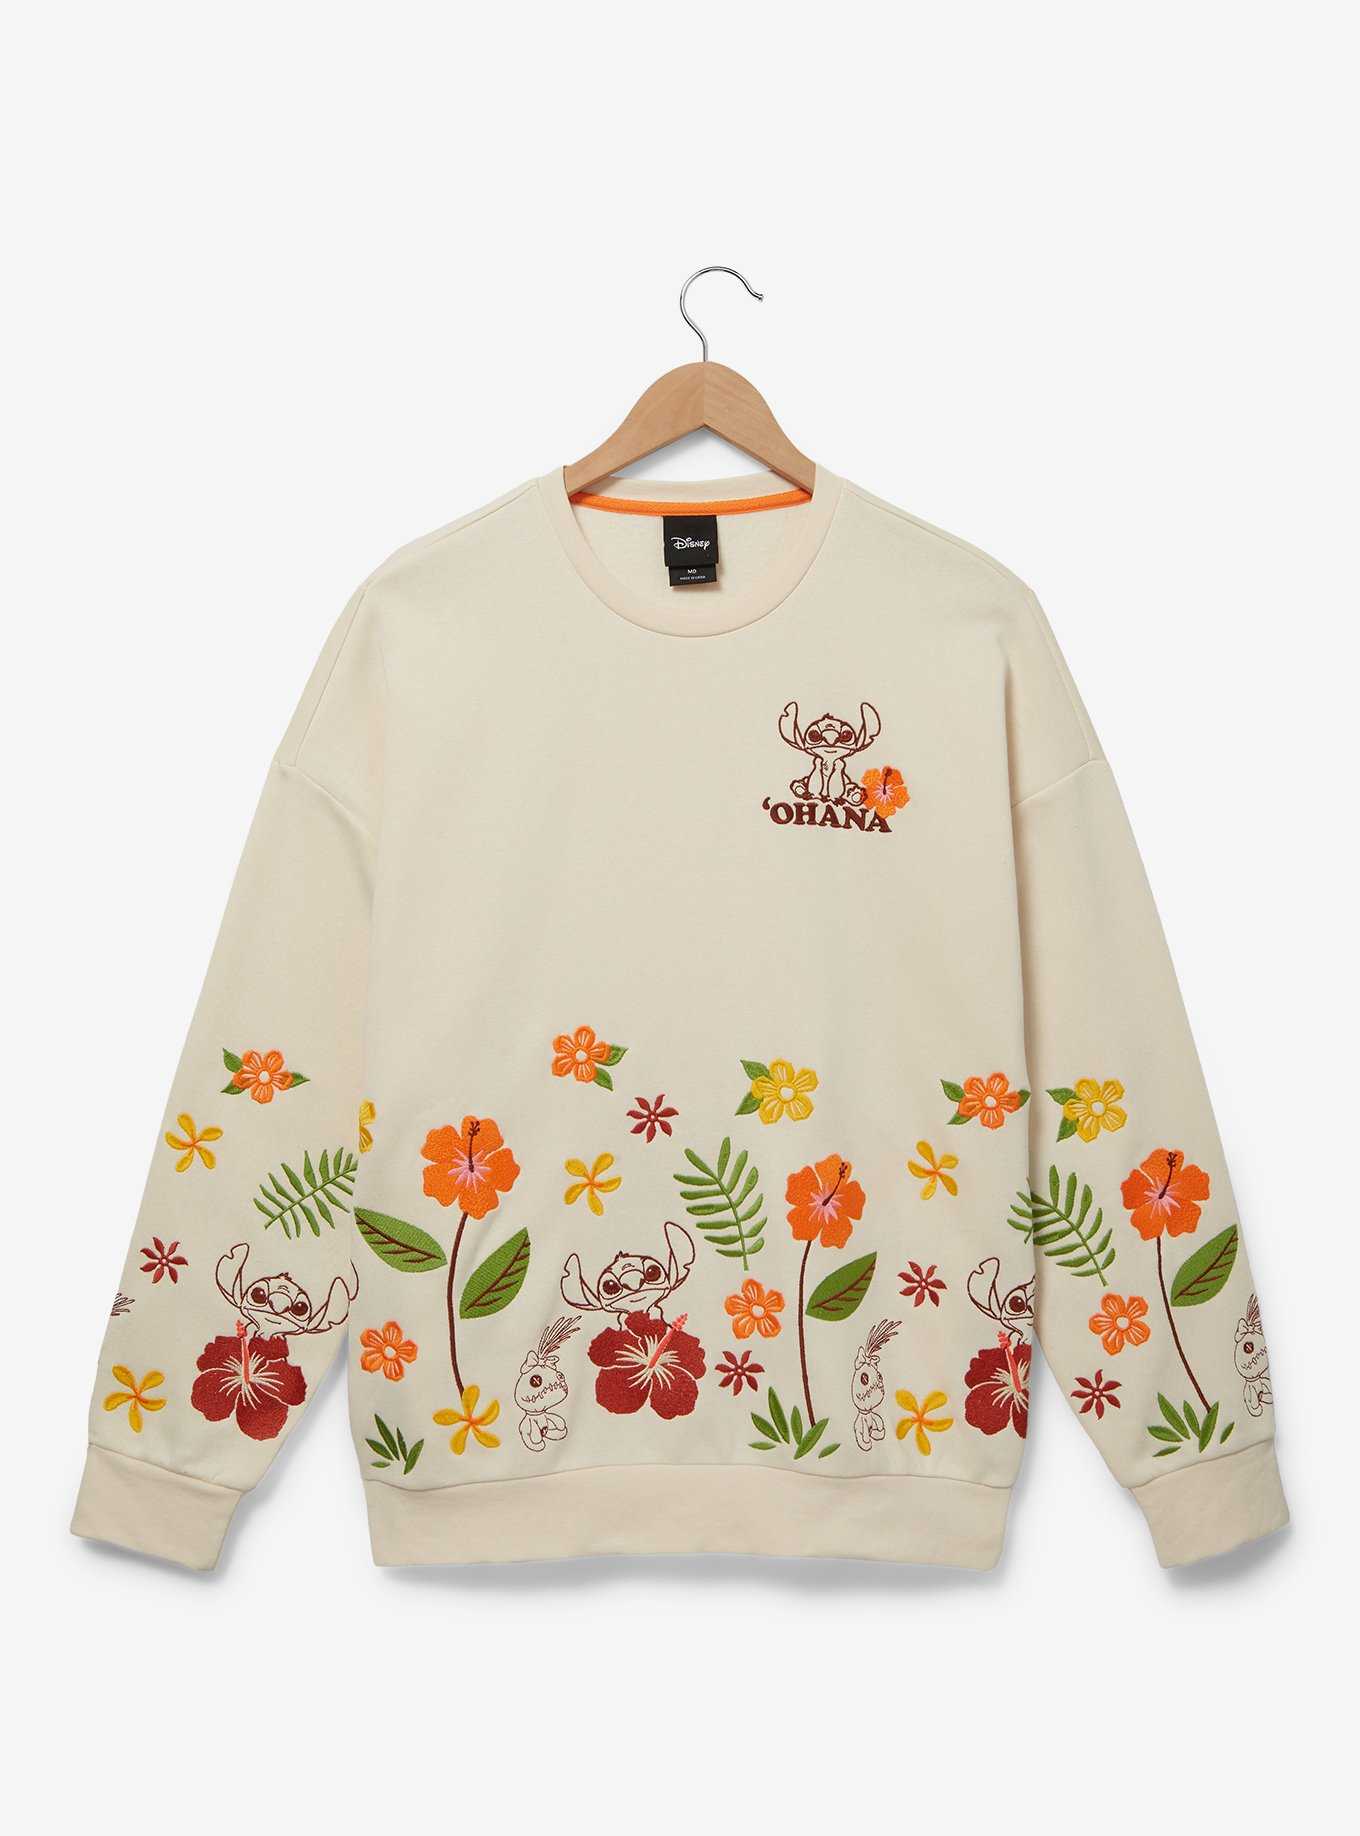 Lilo Stitch Sweatshirt Stitch T Shirt All I Want For Christmas Is Stitch  Shirt Christmas Xmas Gifts - Freedomdesign